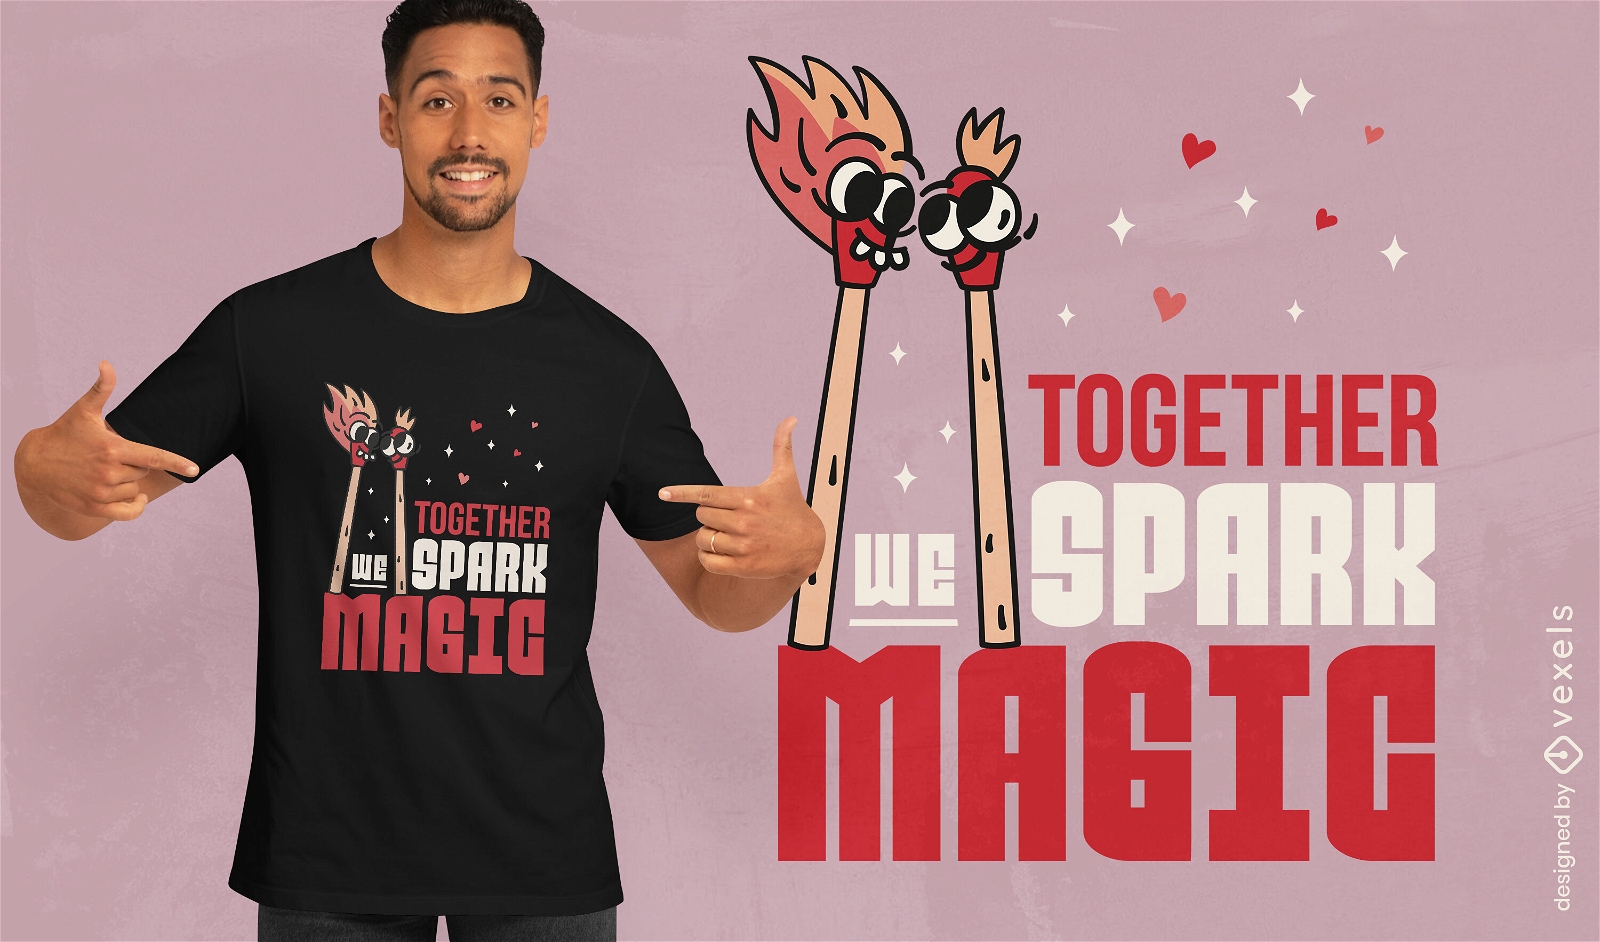 Together we spark matches t-shirt design